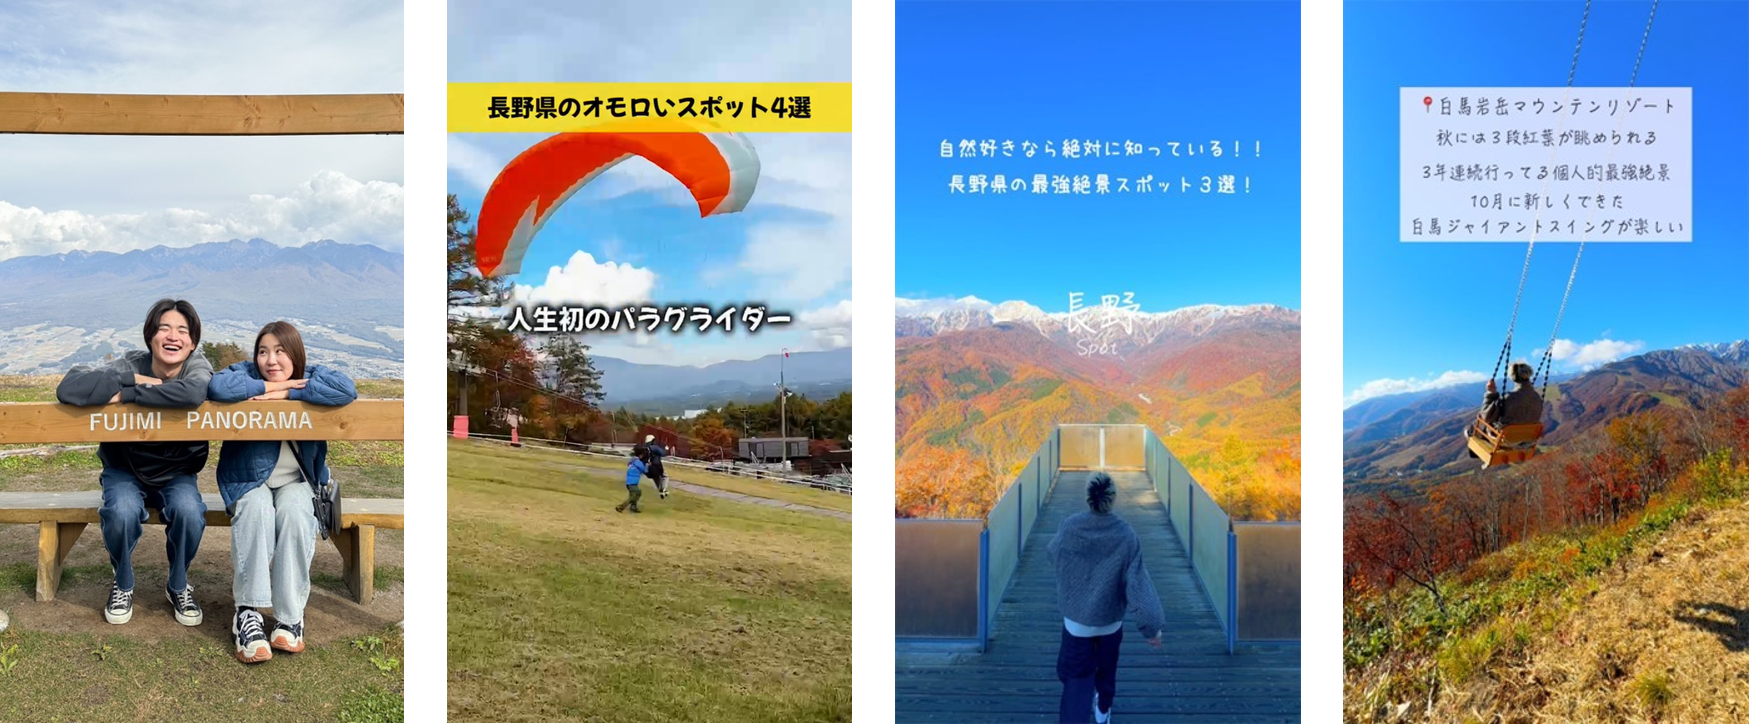 TikTok、長野県等と協力し、長野のアウトドア・観光の魅力発信プロジェクトを実施。11月10日よりショートムービーを公開